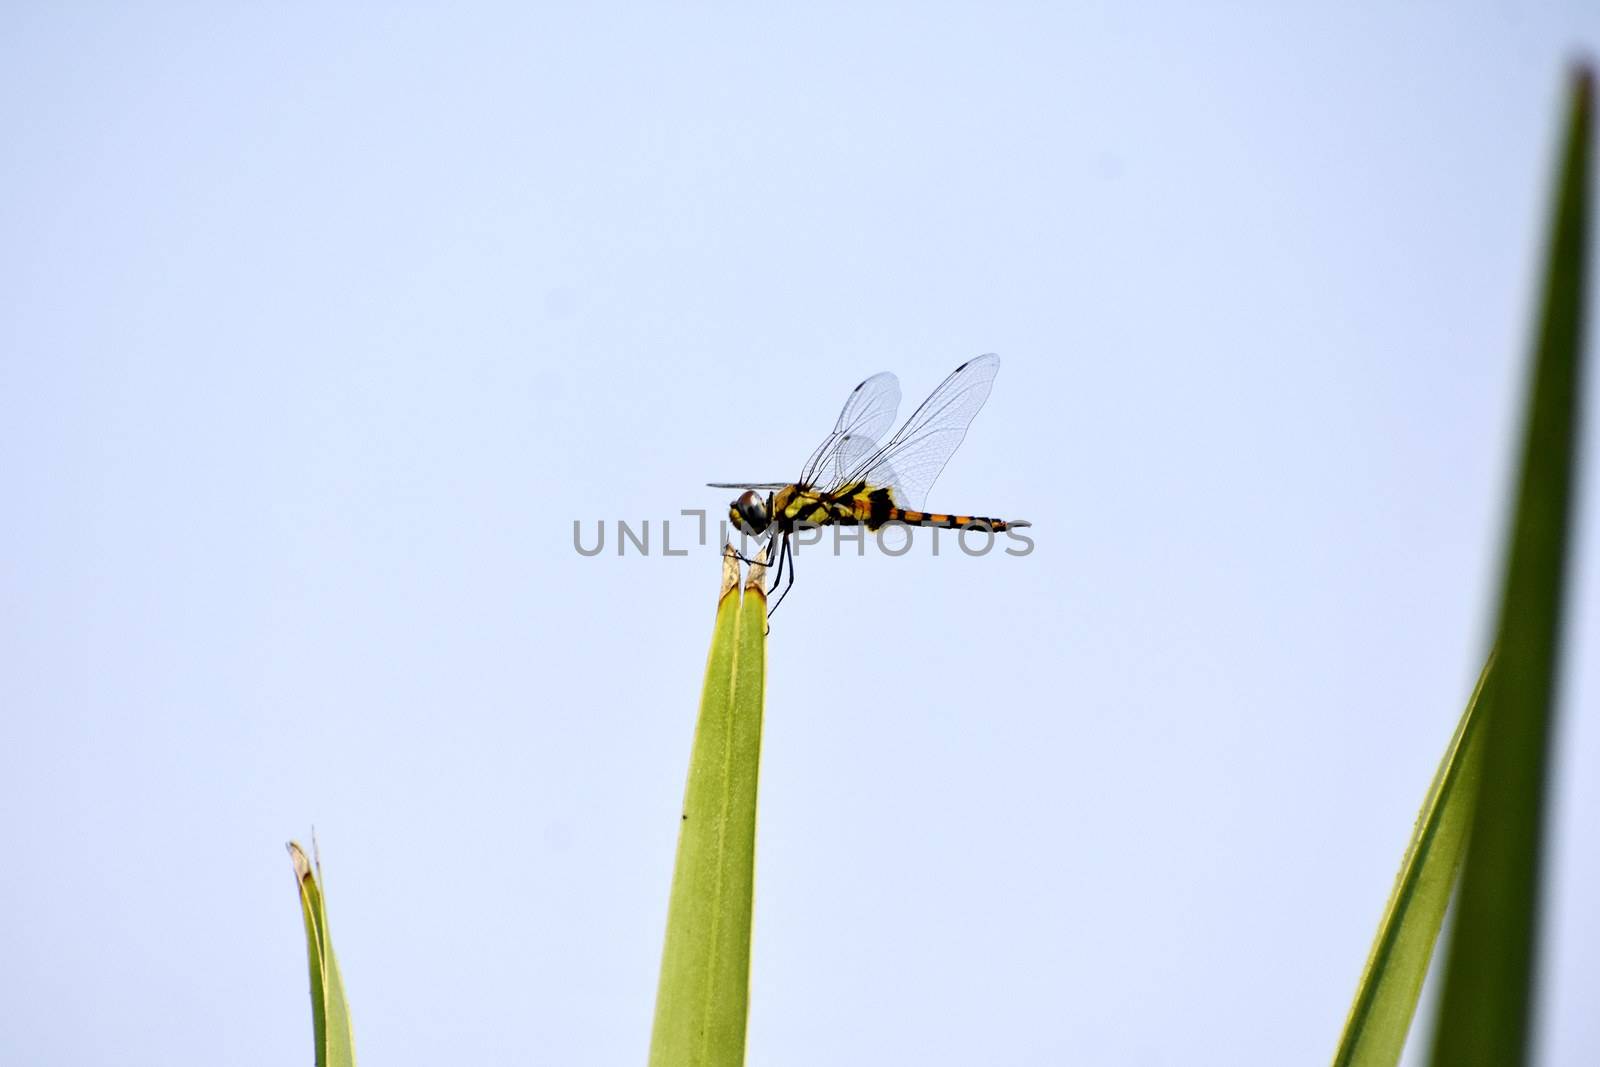 Dragonfly by ravindrabhu165165@gmail.com